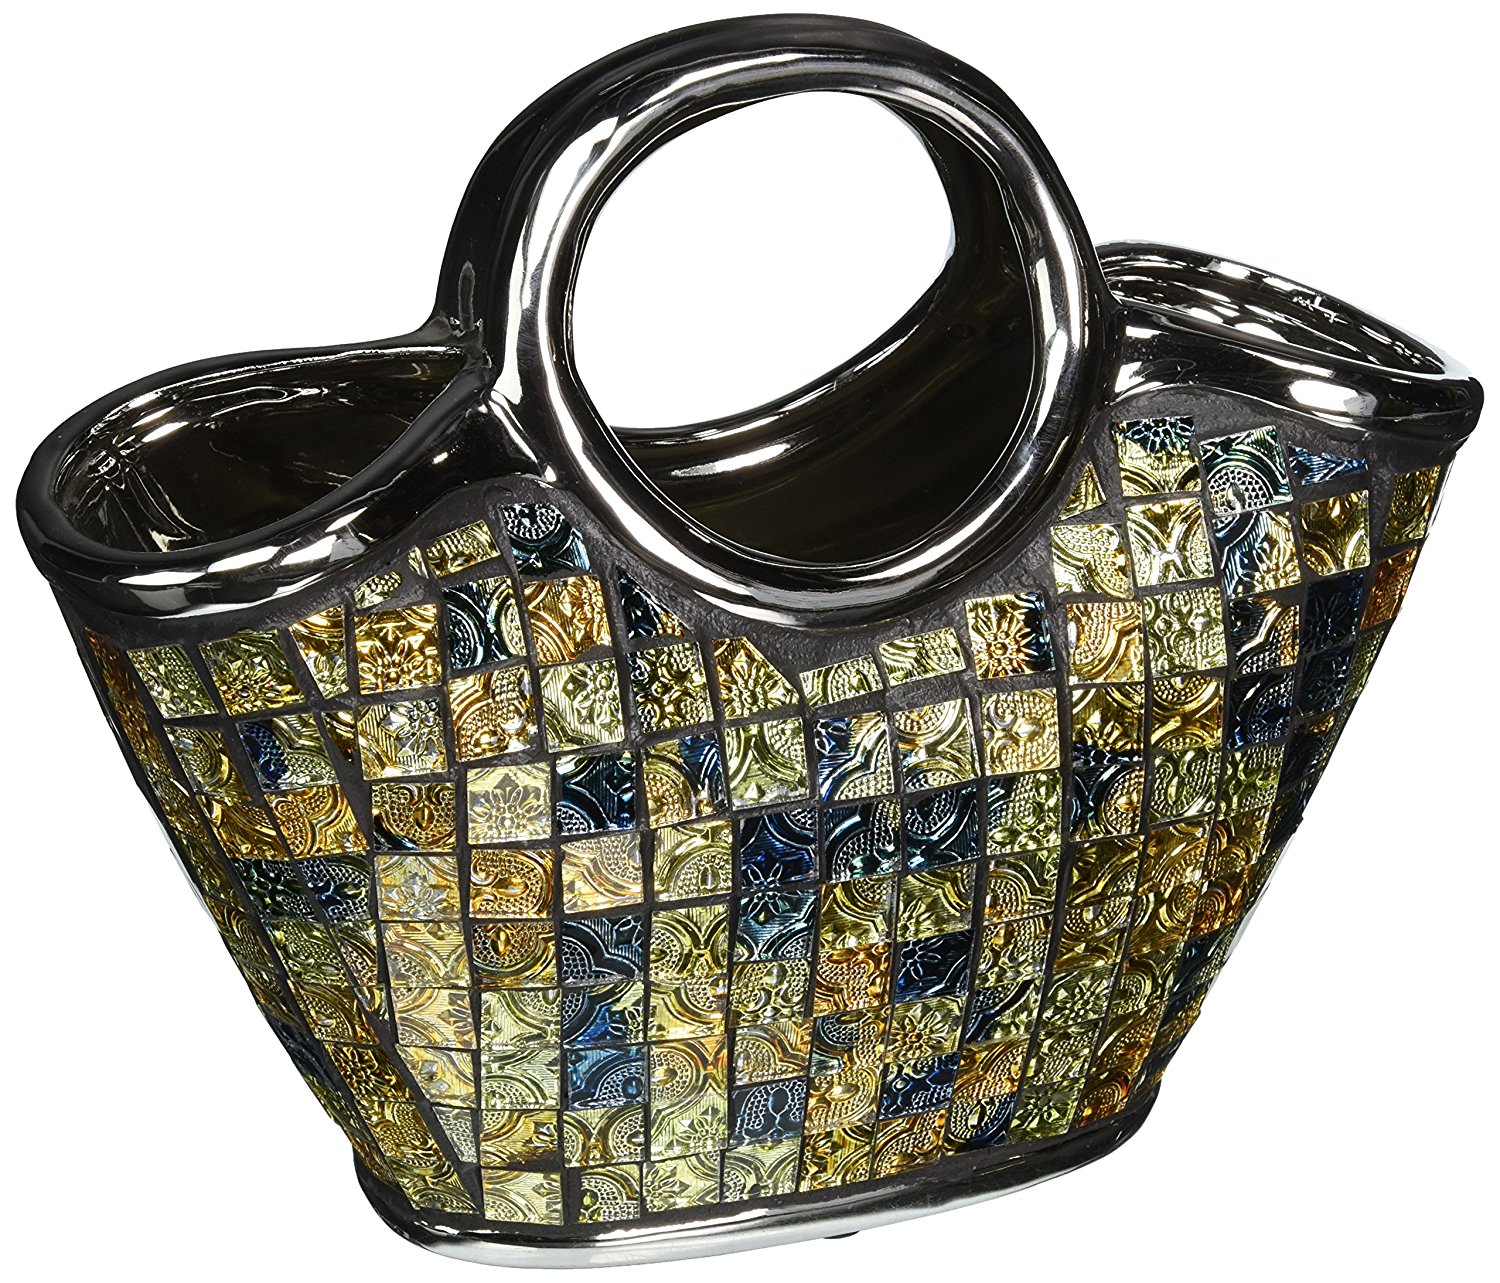 Dmcv003 Purse Decorative Ceramic & Glass Floral Vase - 10.75 X 5.25 X 9.5 In.